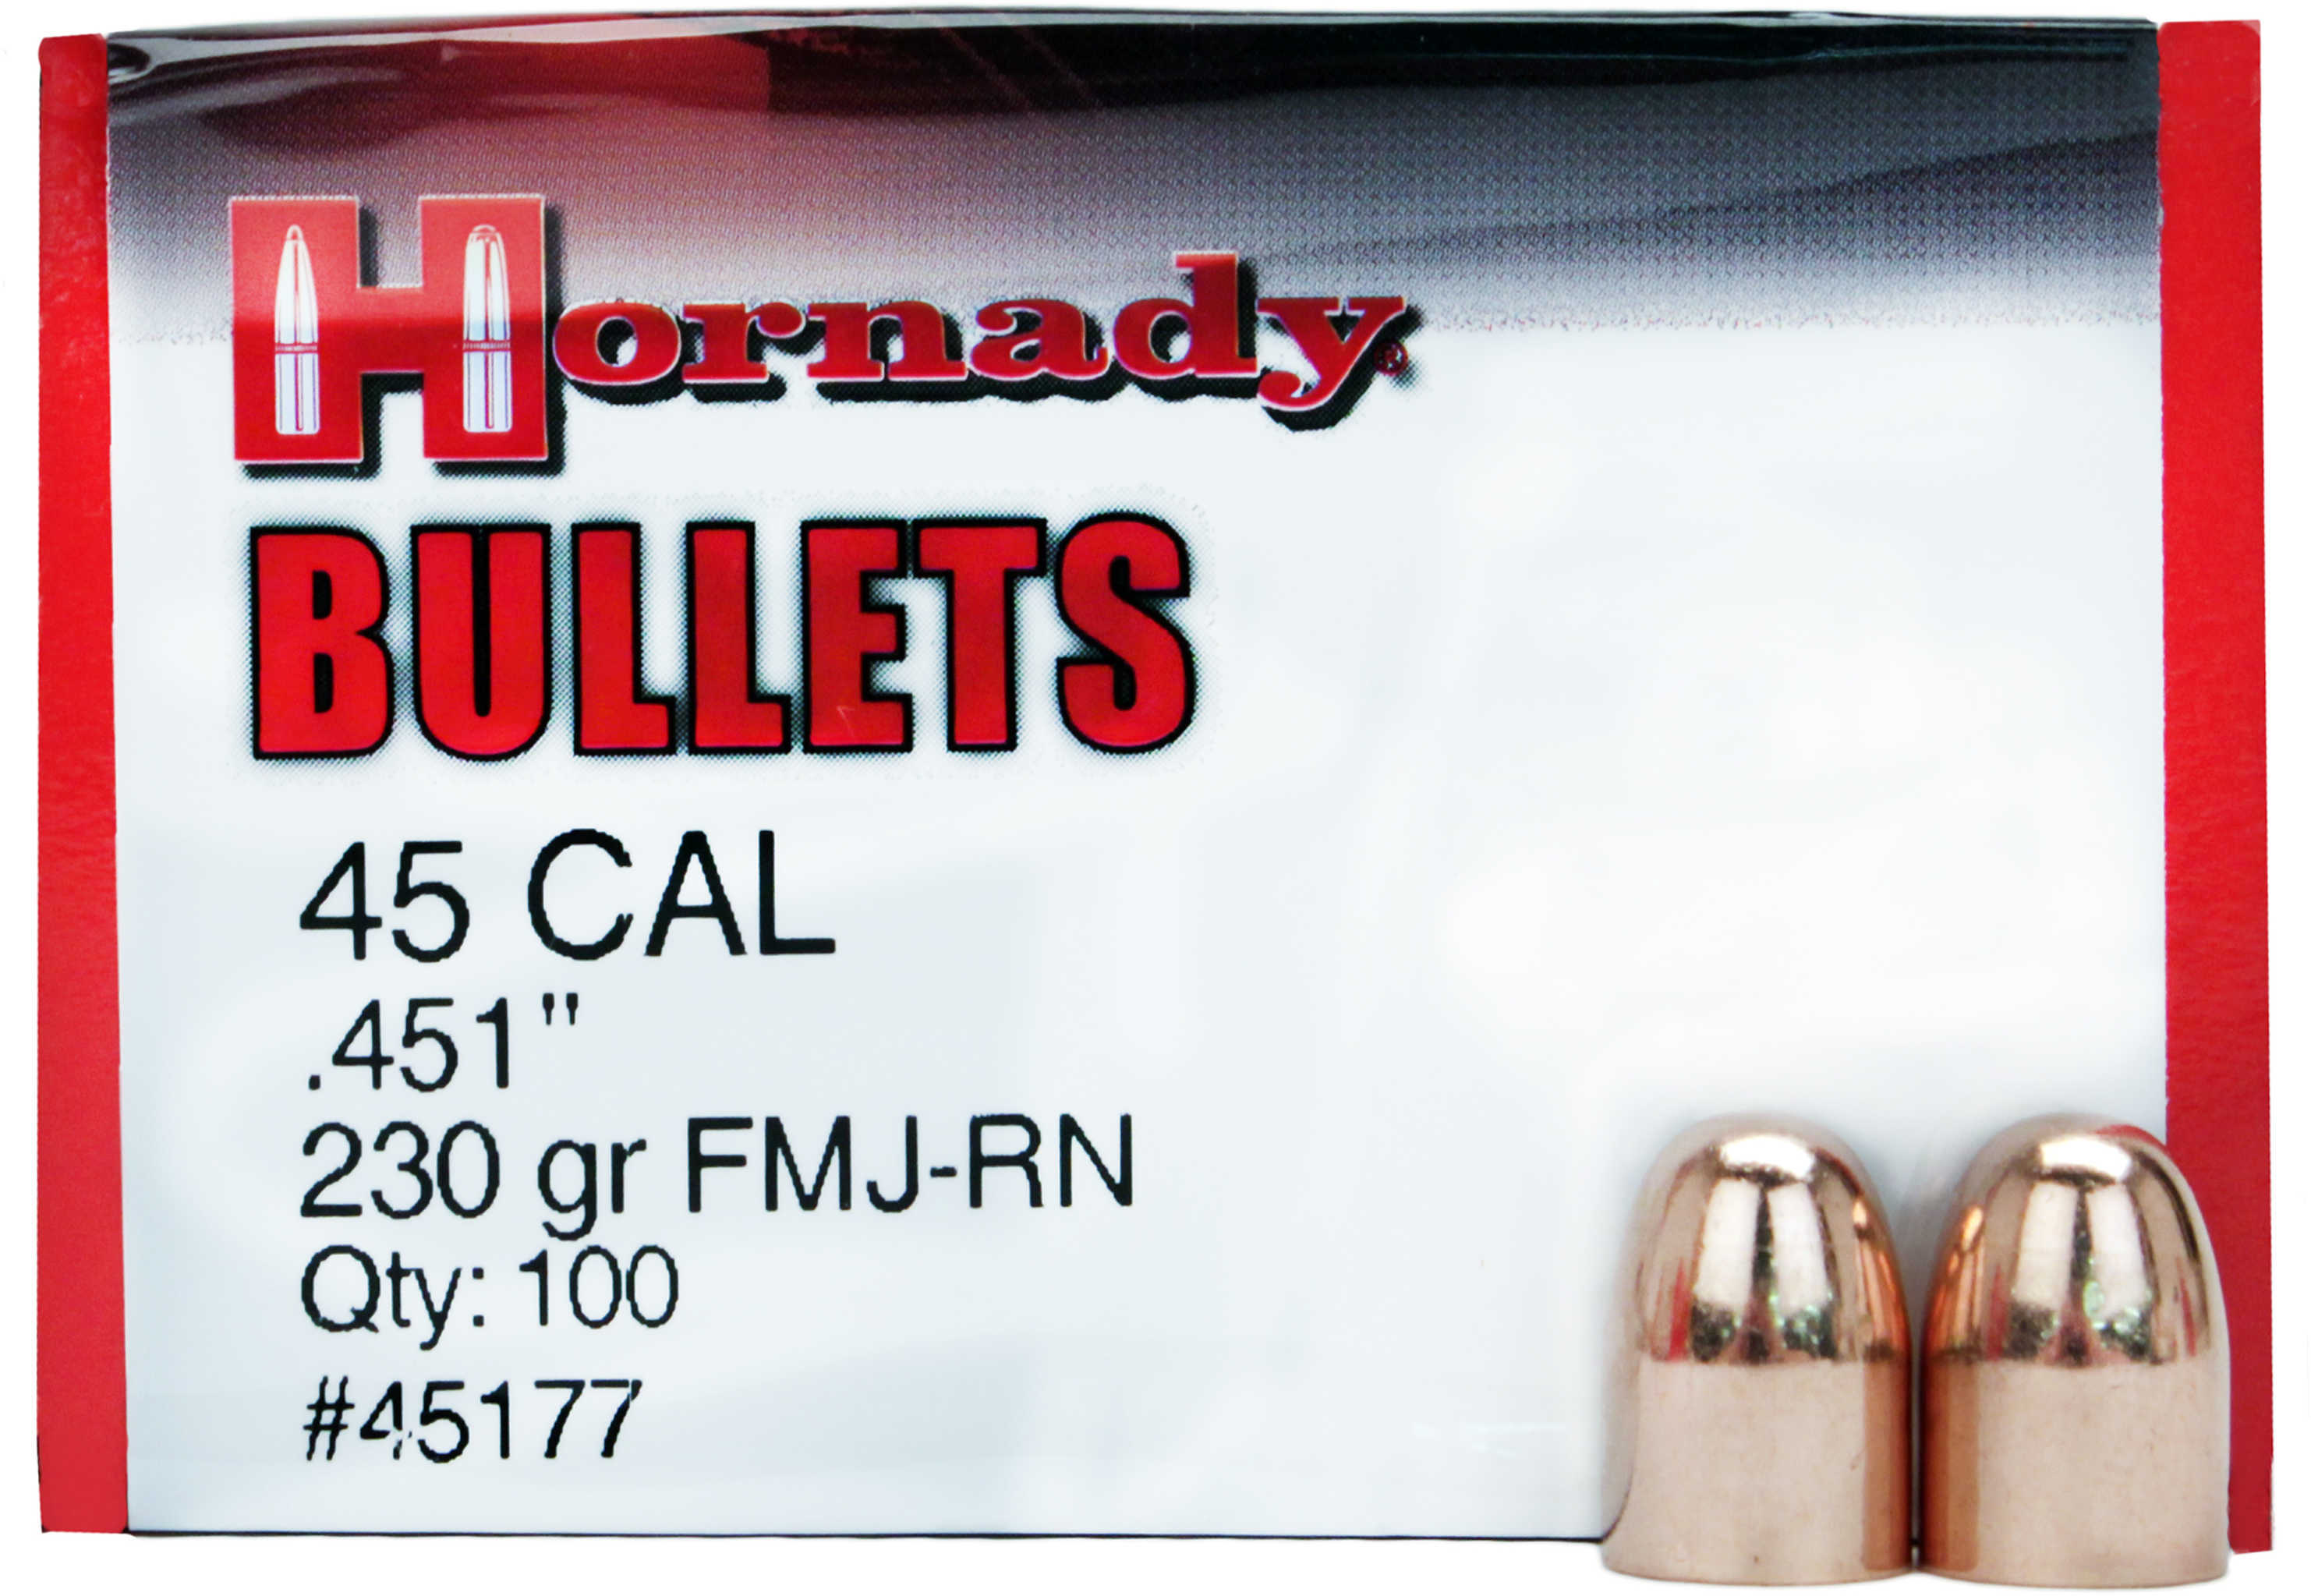 Hornady 45 Caliber Bullets .451 230 Grain FMJ RN Enc Per 100 Md: 45177